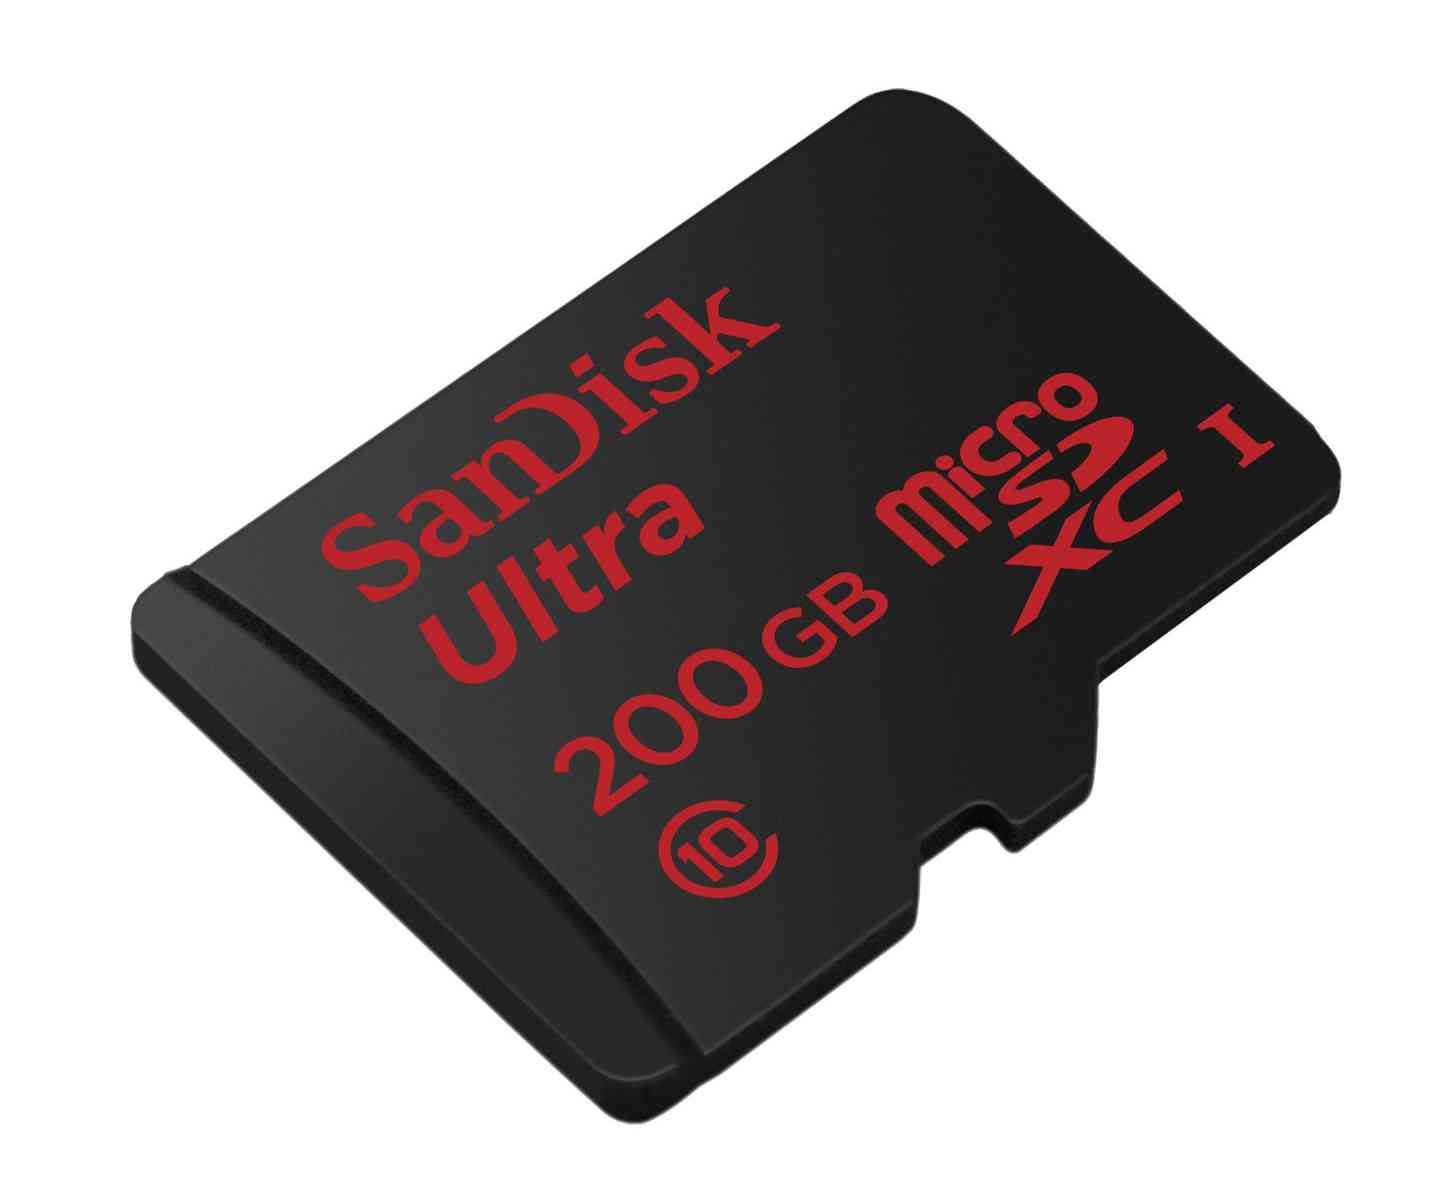 SanDisk 200GB microSD card large